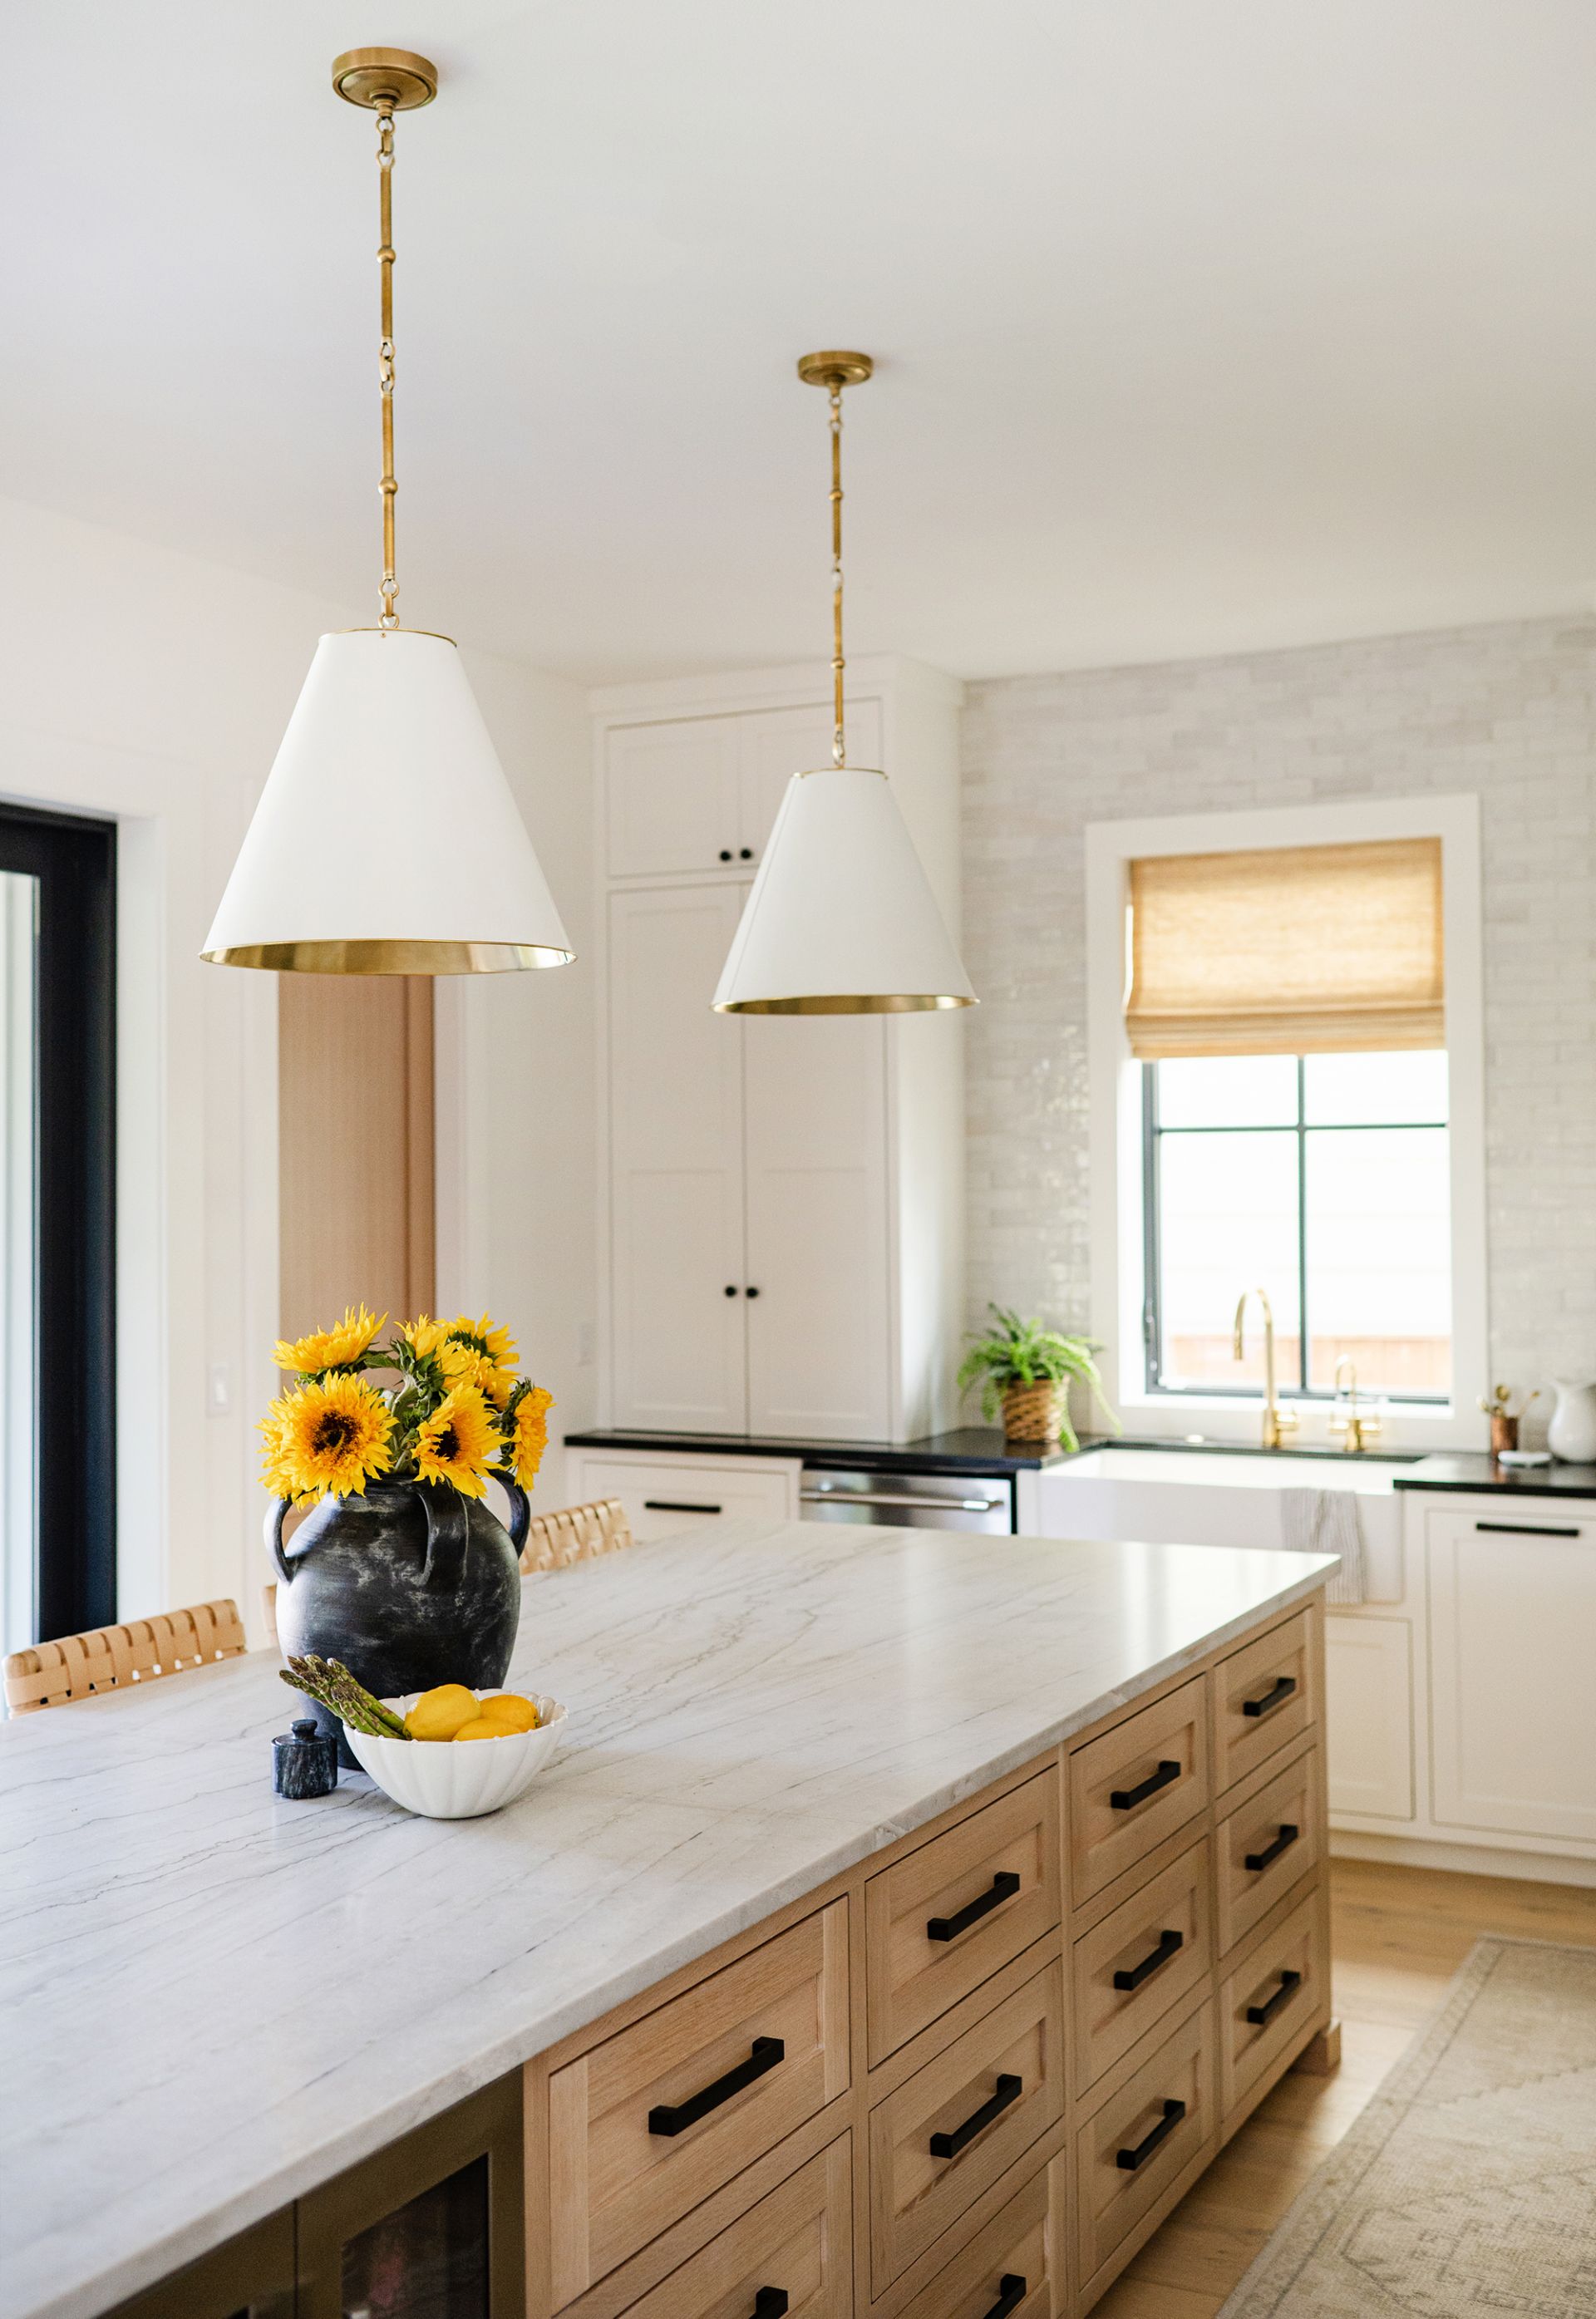 Traditional white kitchen ideas – 20 timeless period spaces